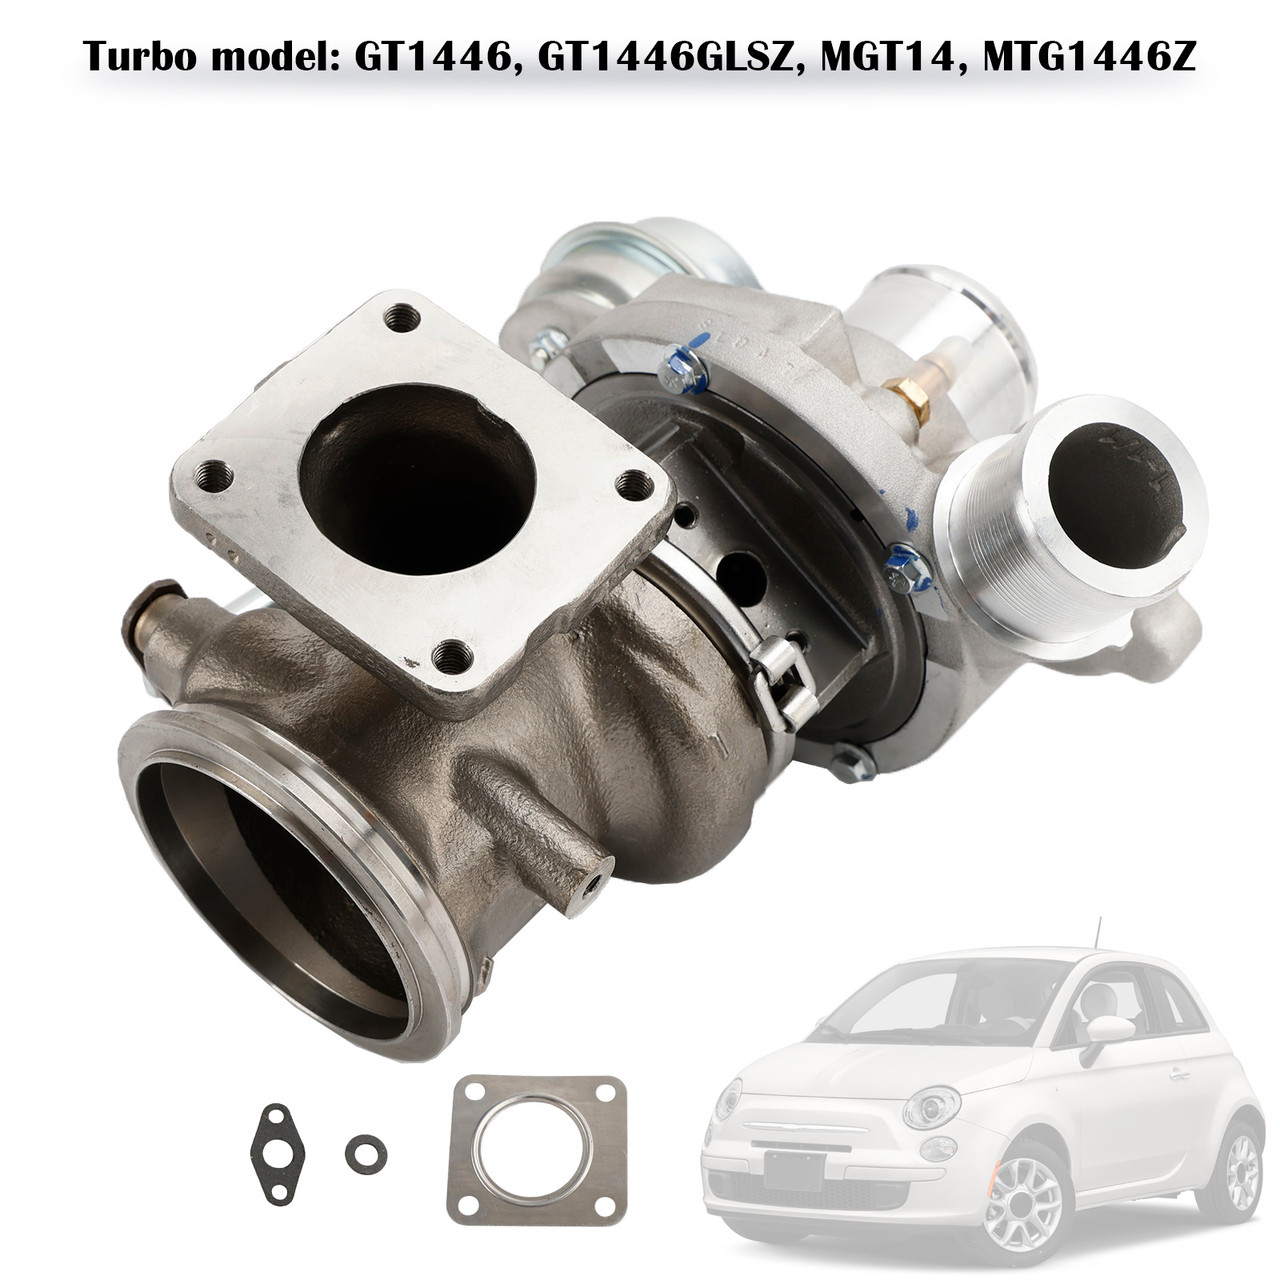 Turbo Turbocharger For Fiat 500 1.4L GT1446 810944 786825 55238189 55219660